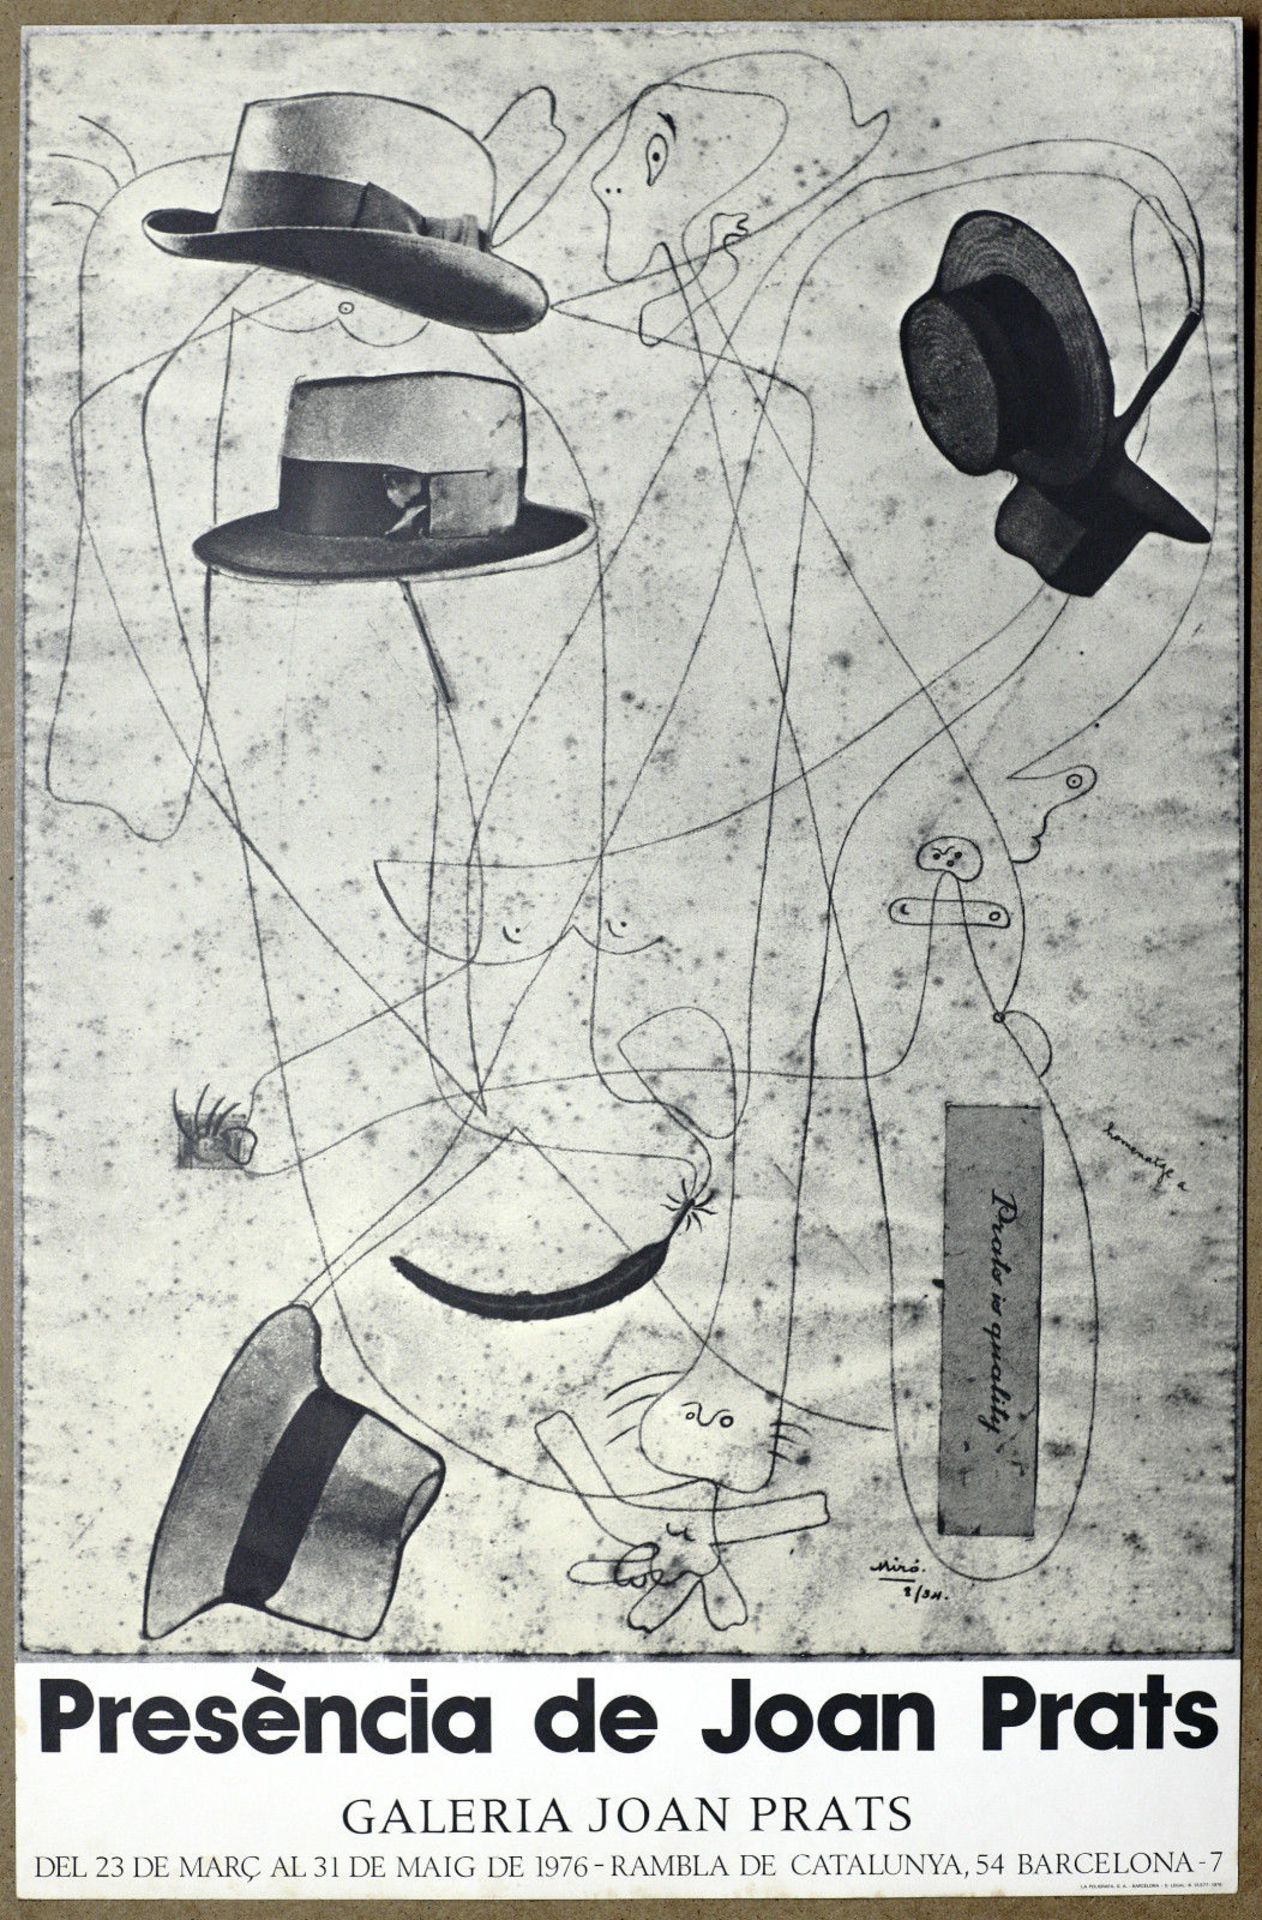 Joan Miro (1893-1983) Exhibition "Presencia" poster by Joan Prats in Barcelona, [...]